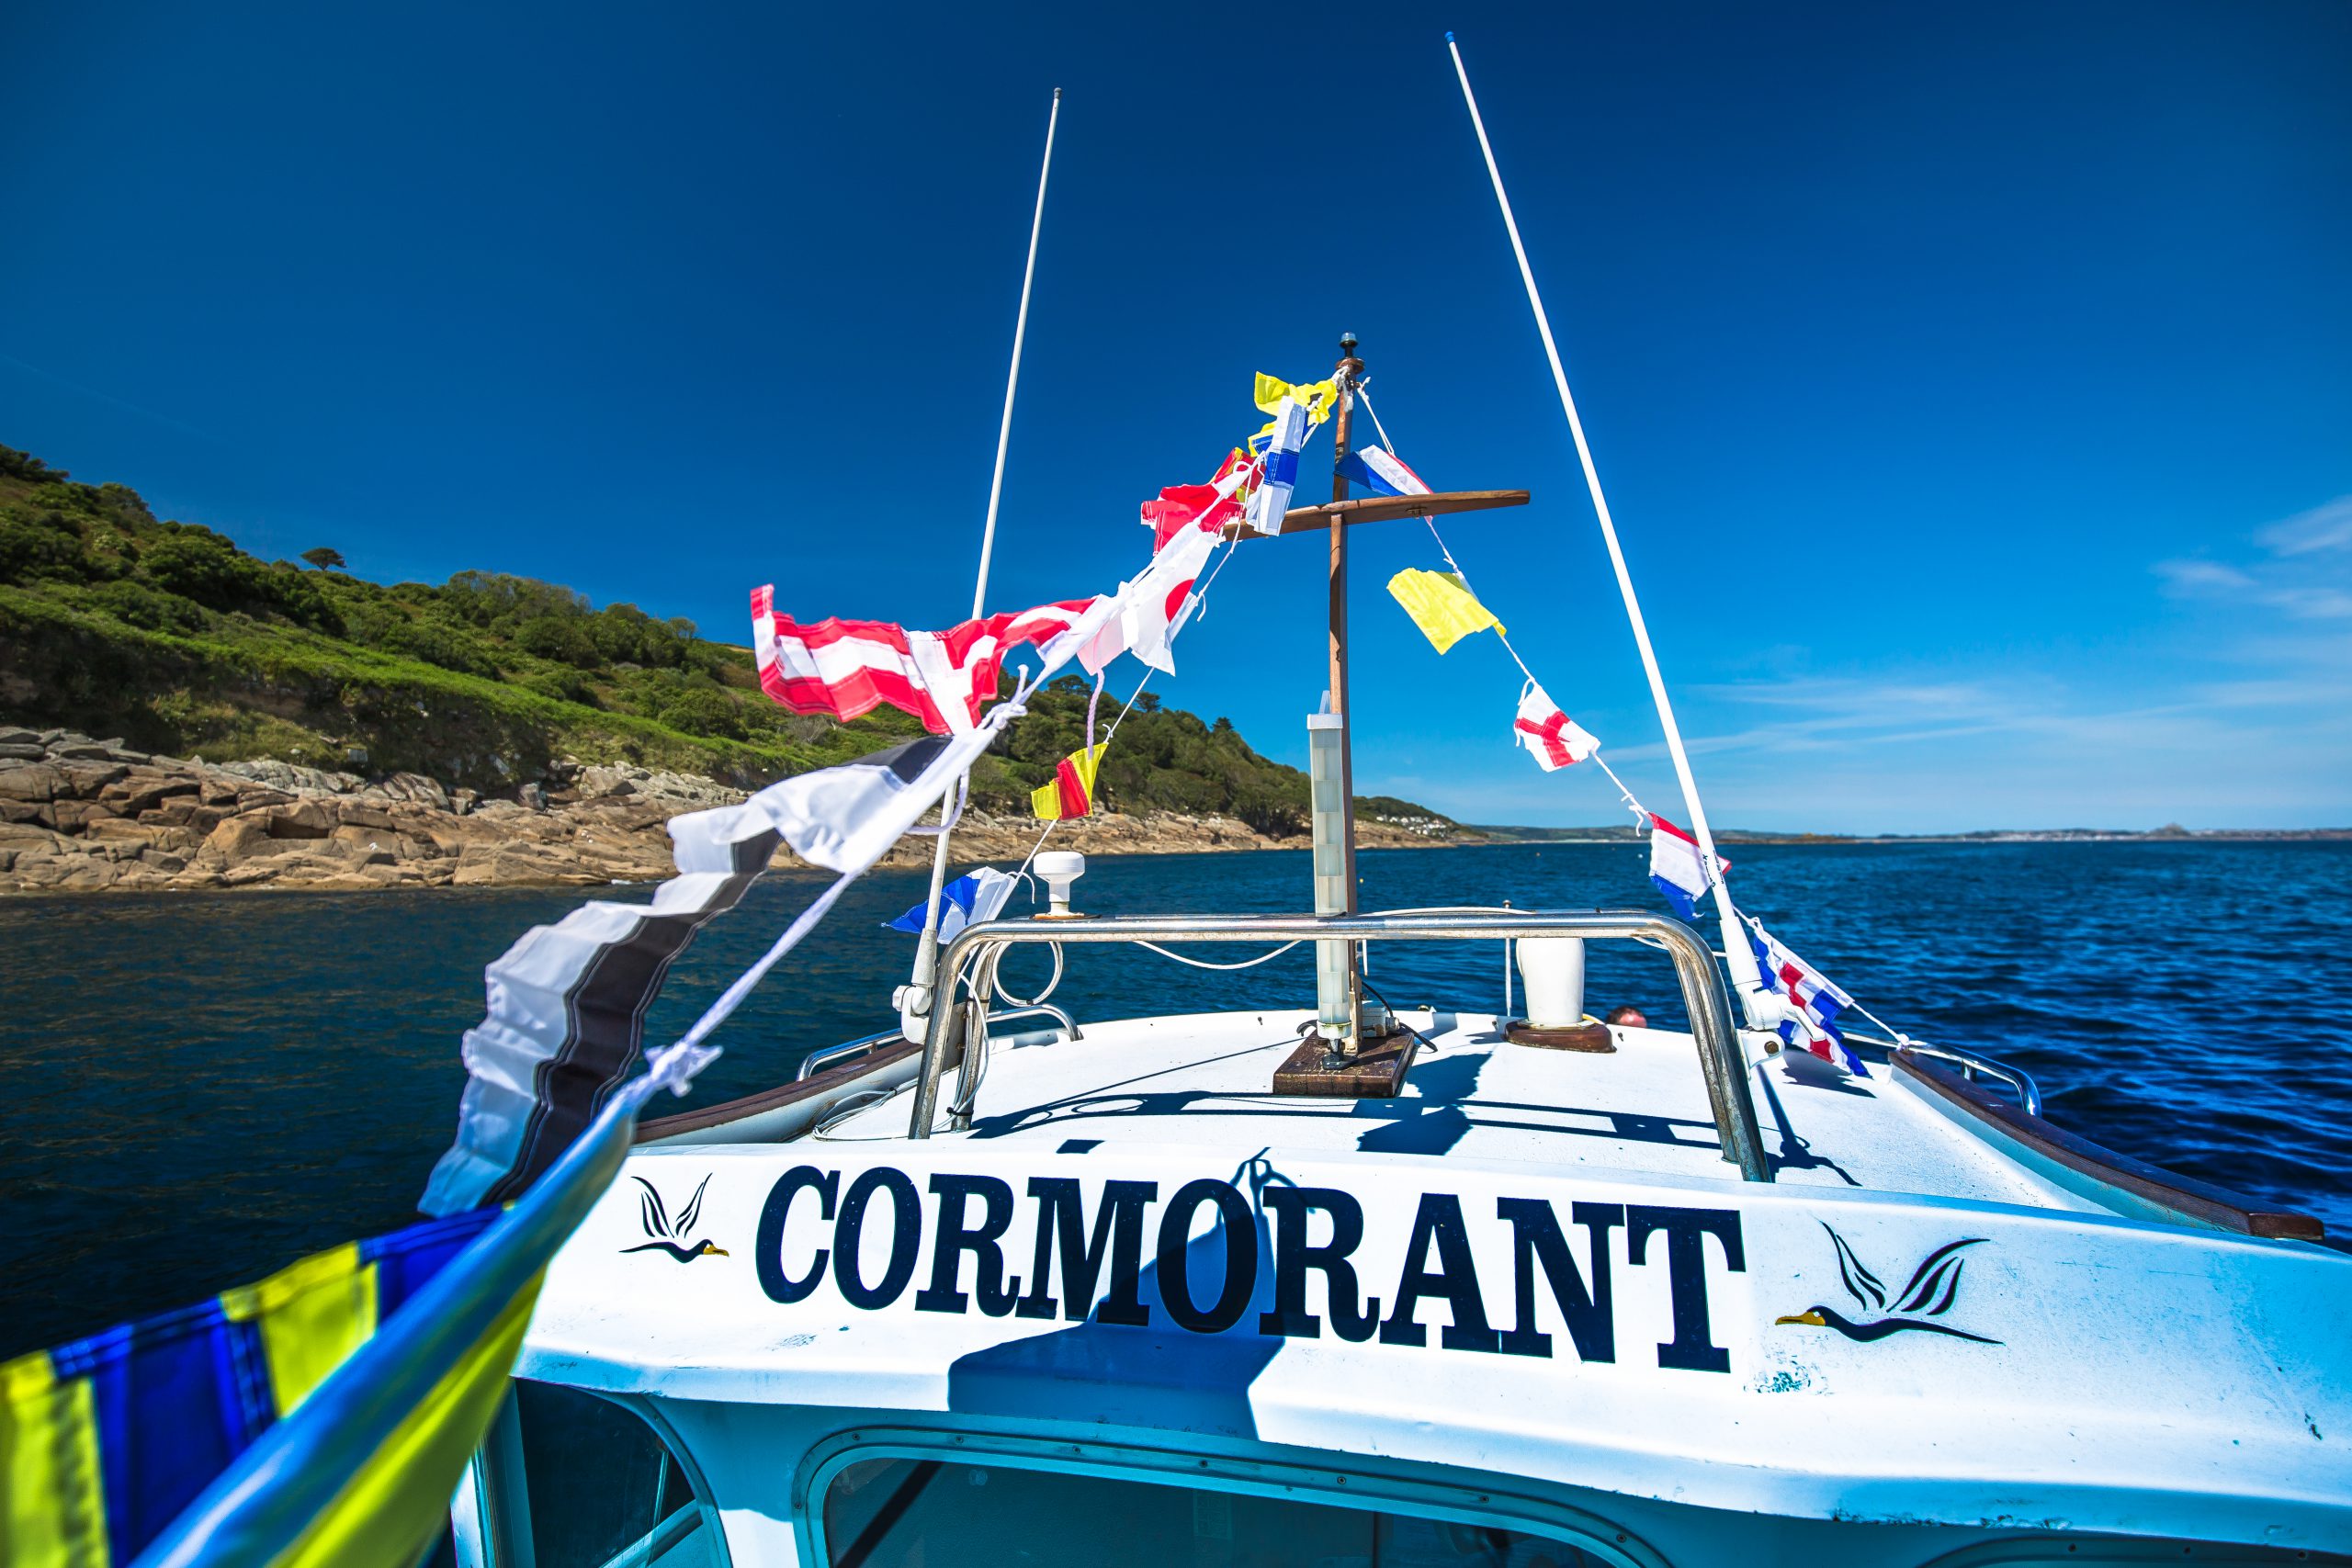 The Cormorant chugging down the spectacular Cornish coastline.